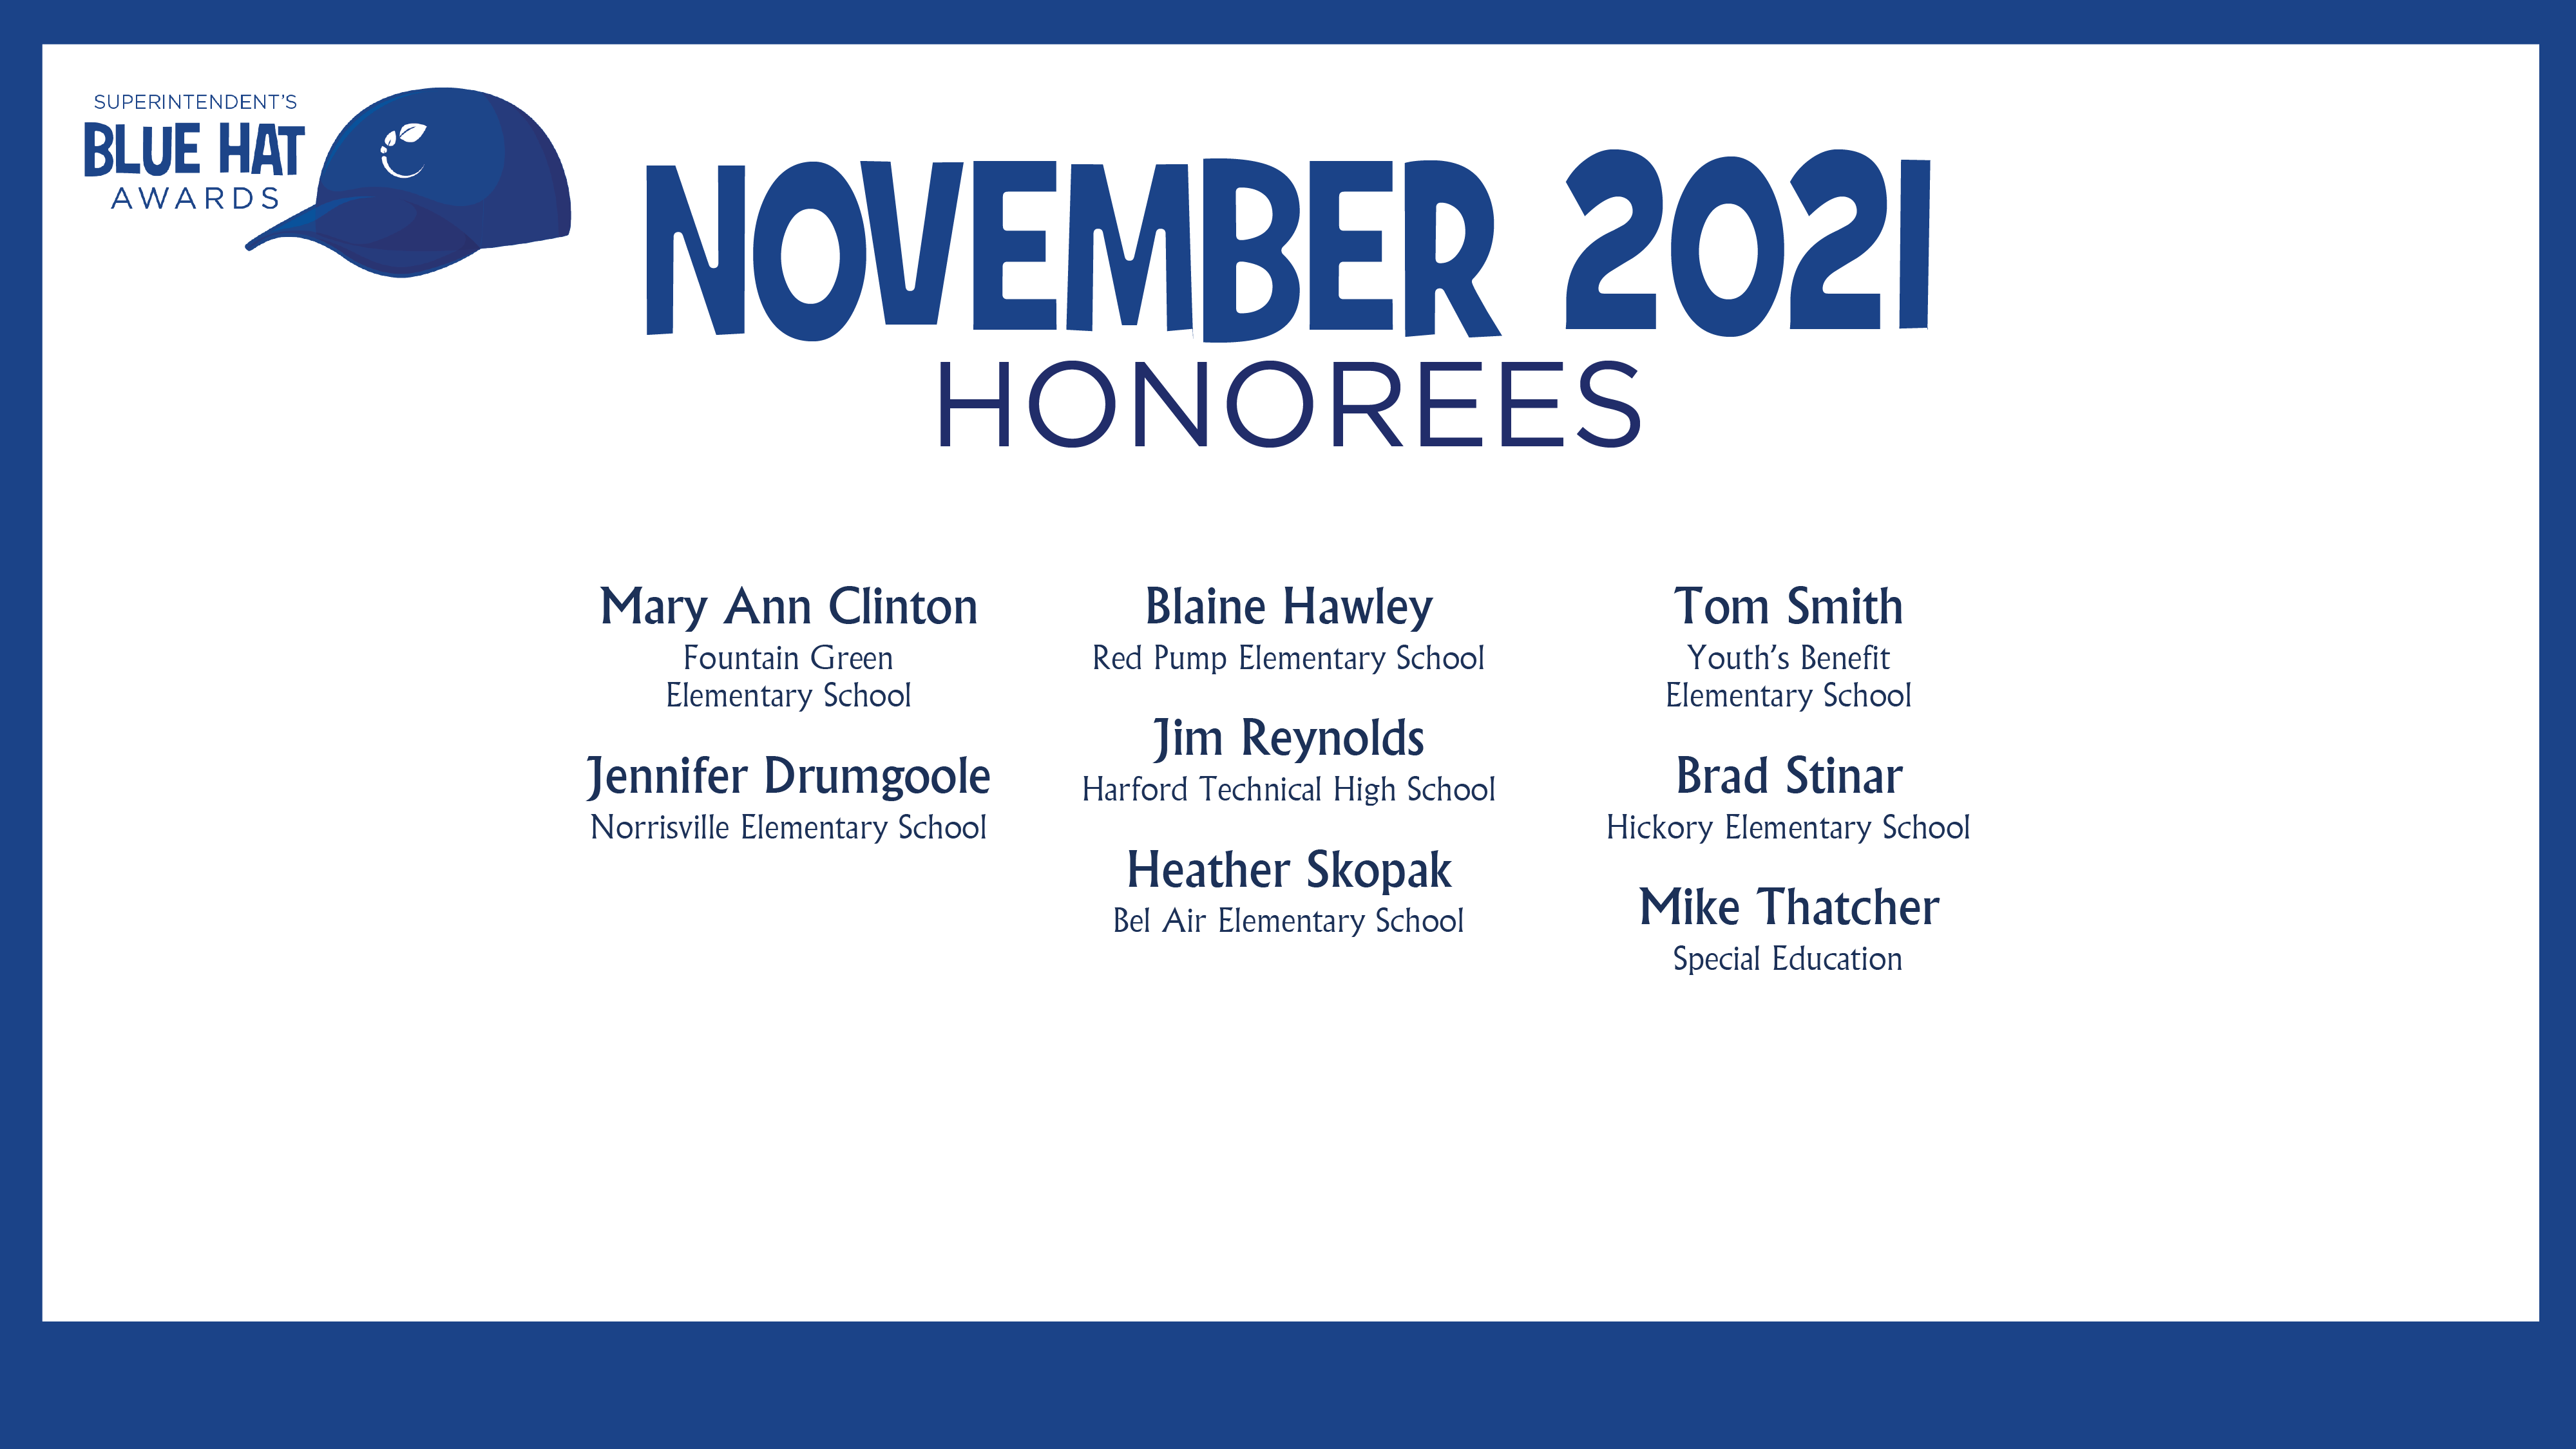 HCPS Blue Hat Honorees - November 2021